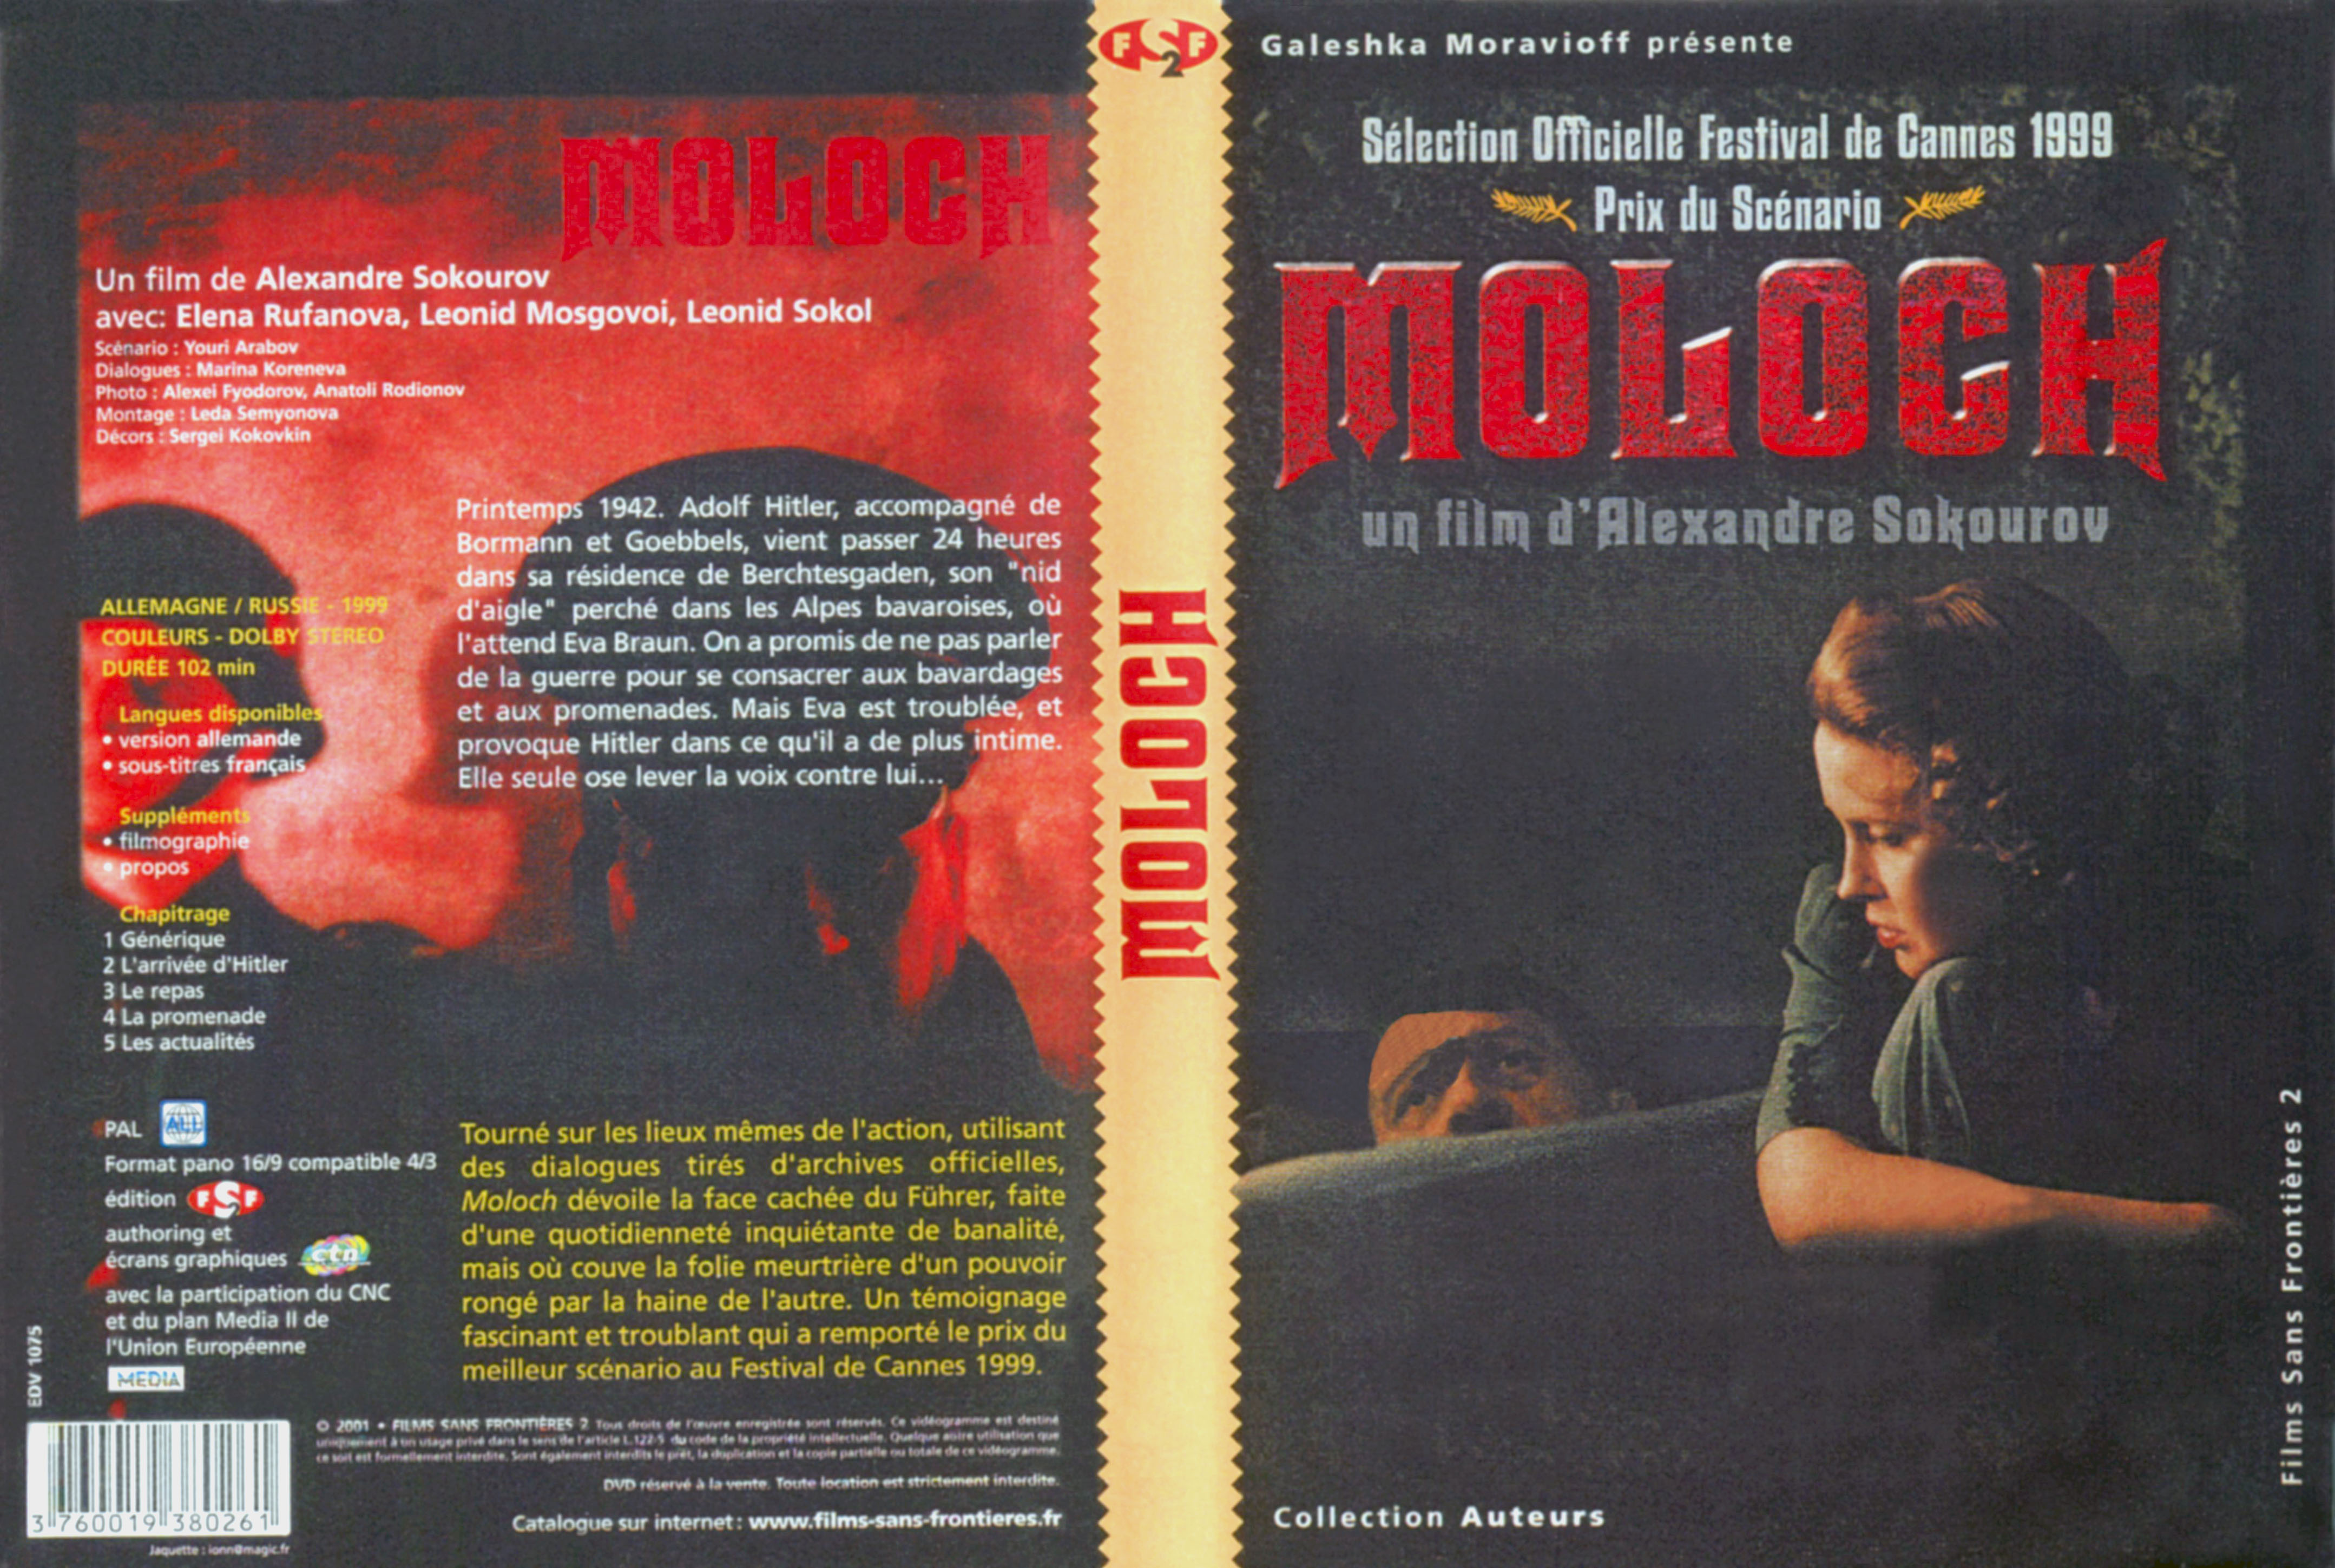 Jaquette DVD Moloch